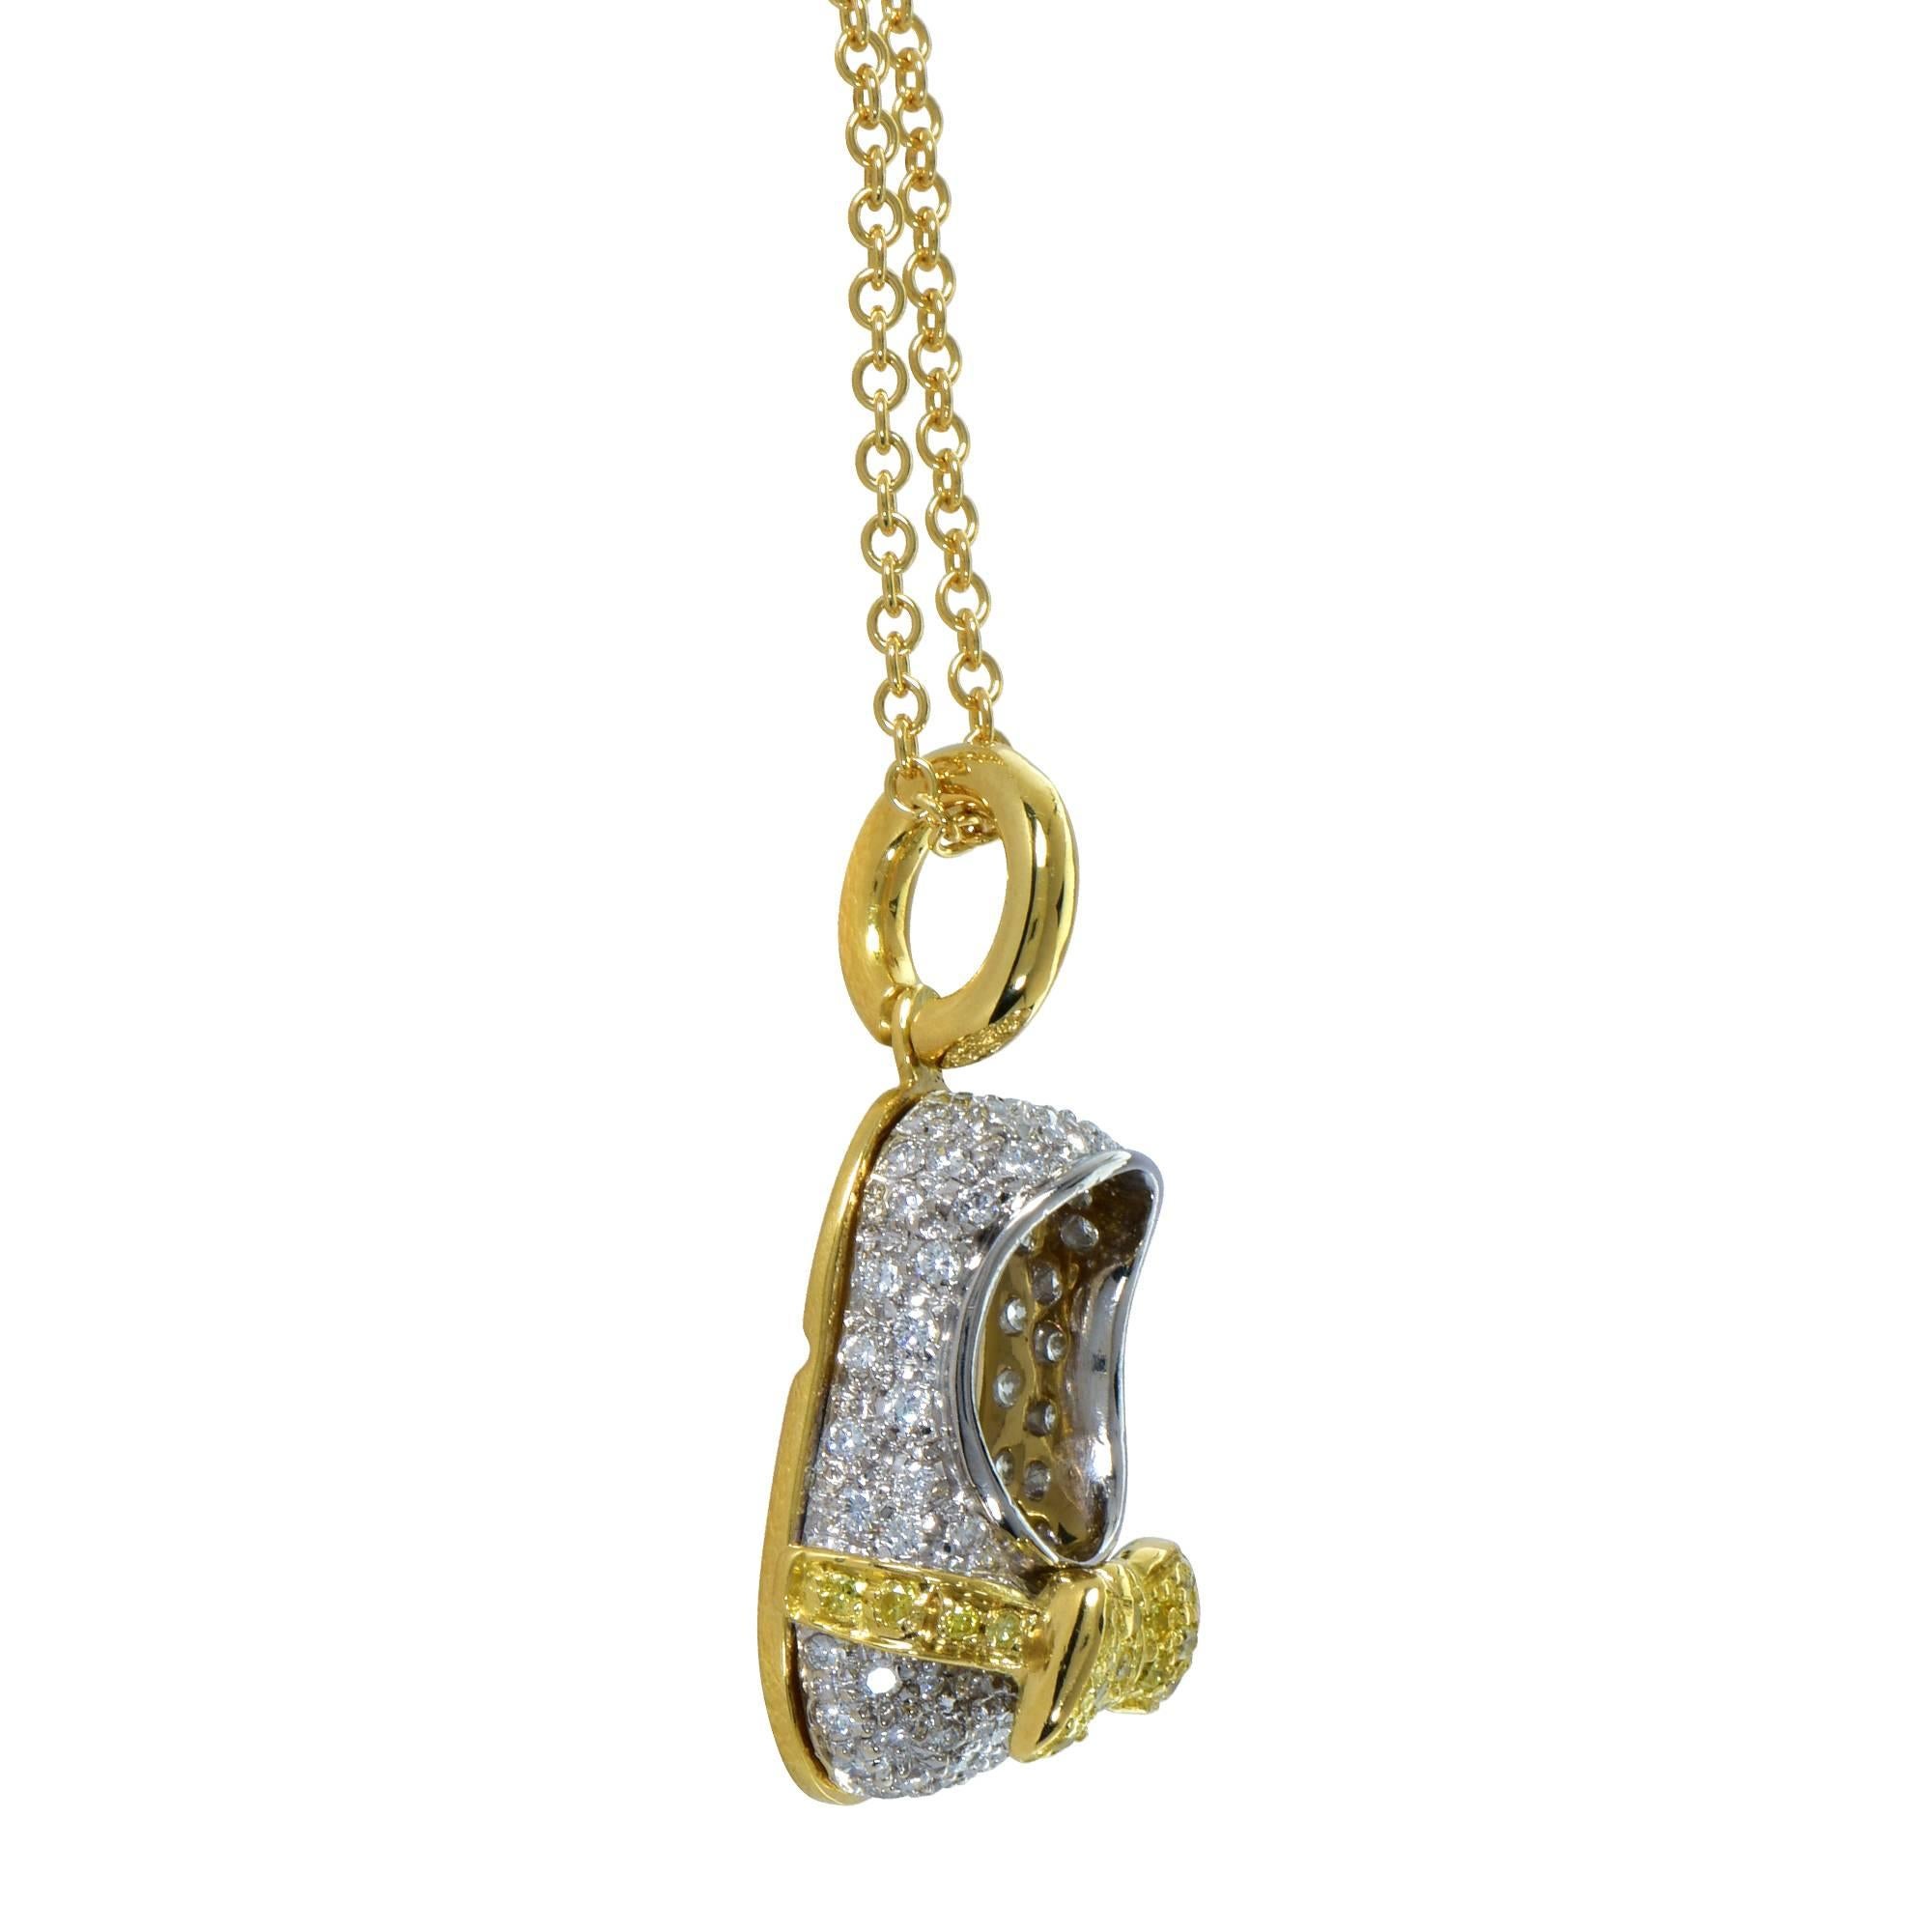 Modern Aaron Basha 1 Carat Diamond Baby Shoe Pendant with Necklace